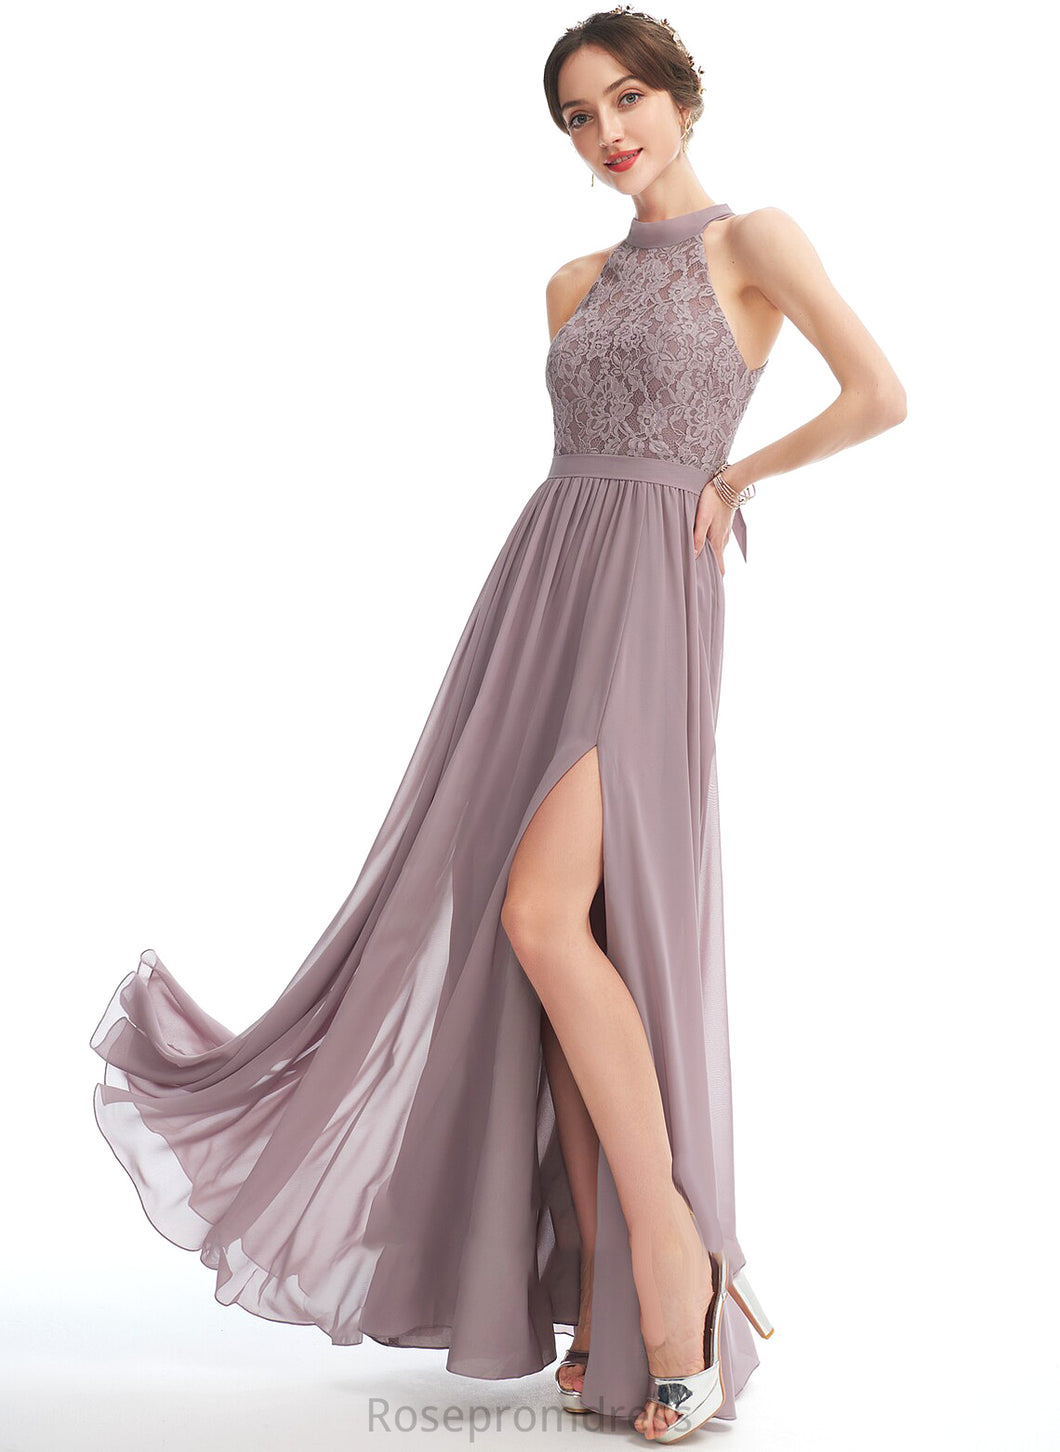 Fabric Embellishment Length A-Line Neckline SplitFront Floor-Length Silhouette Halter Zaria Scoop Natural Waist Bridesmaid Dresses